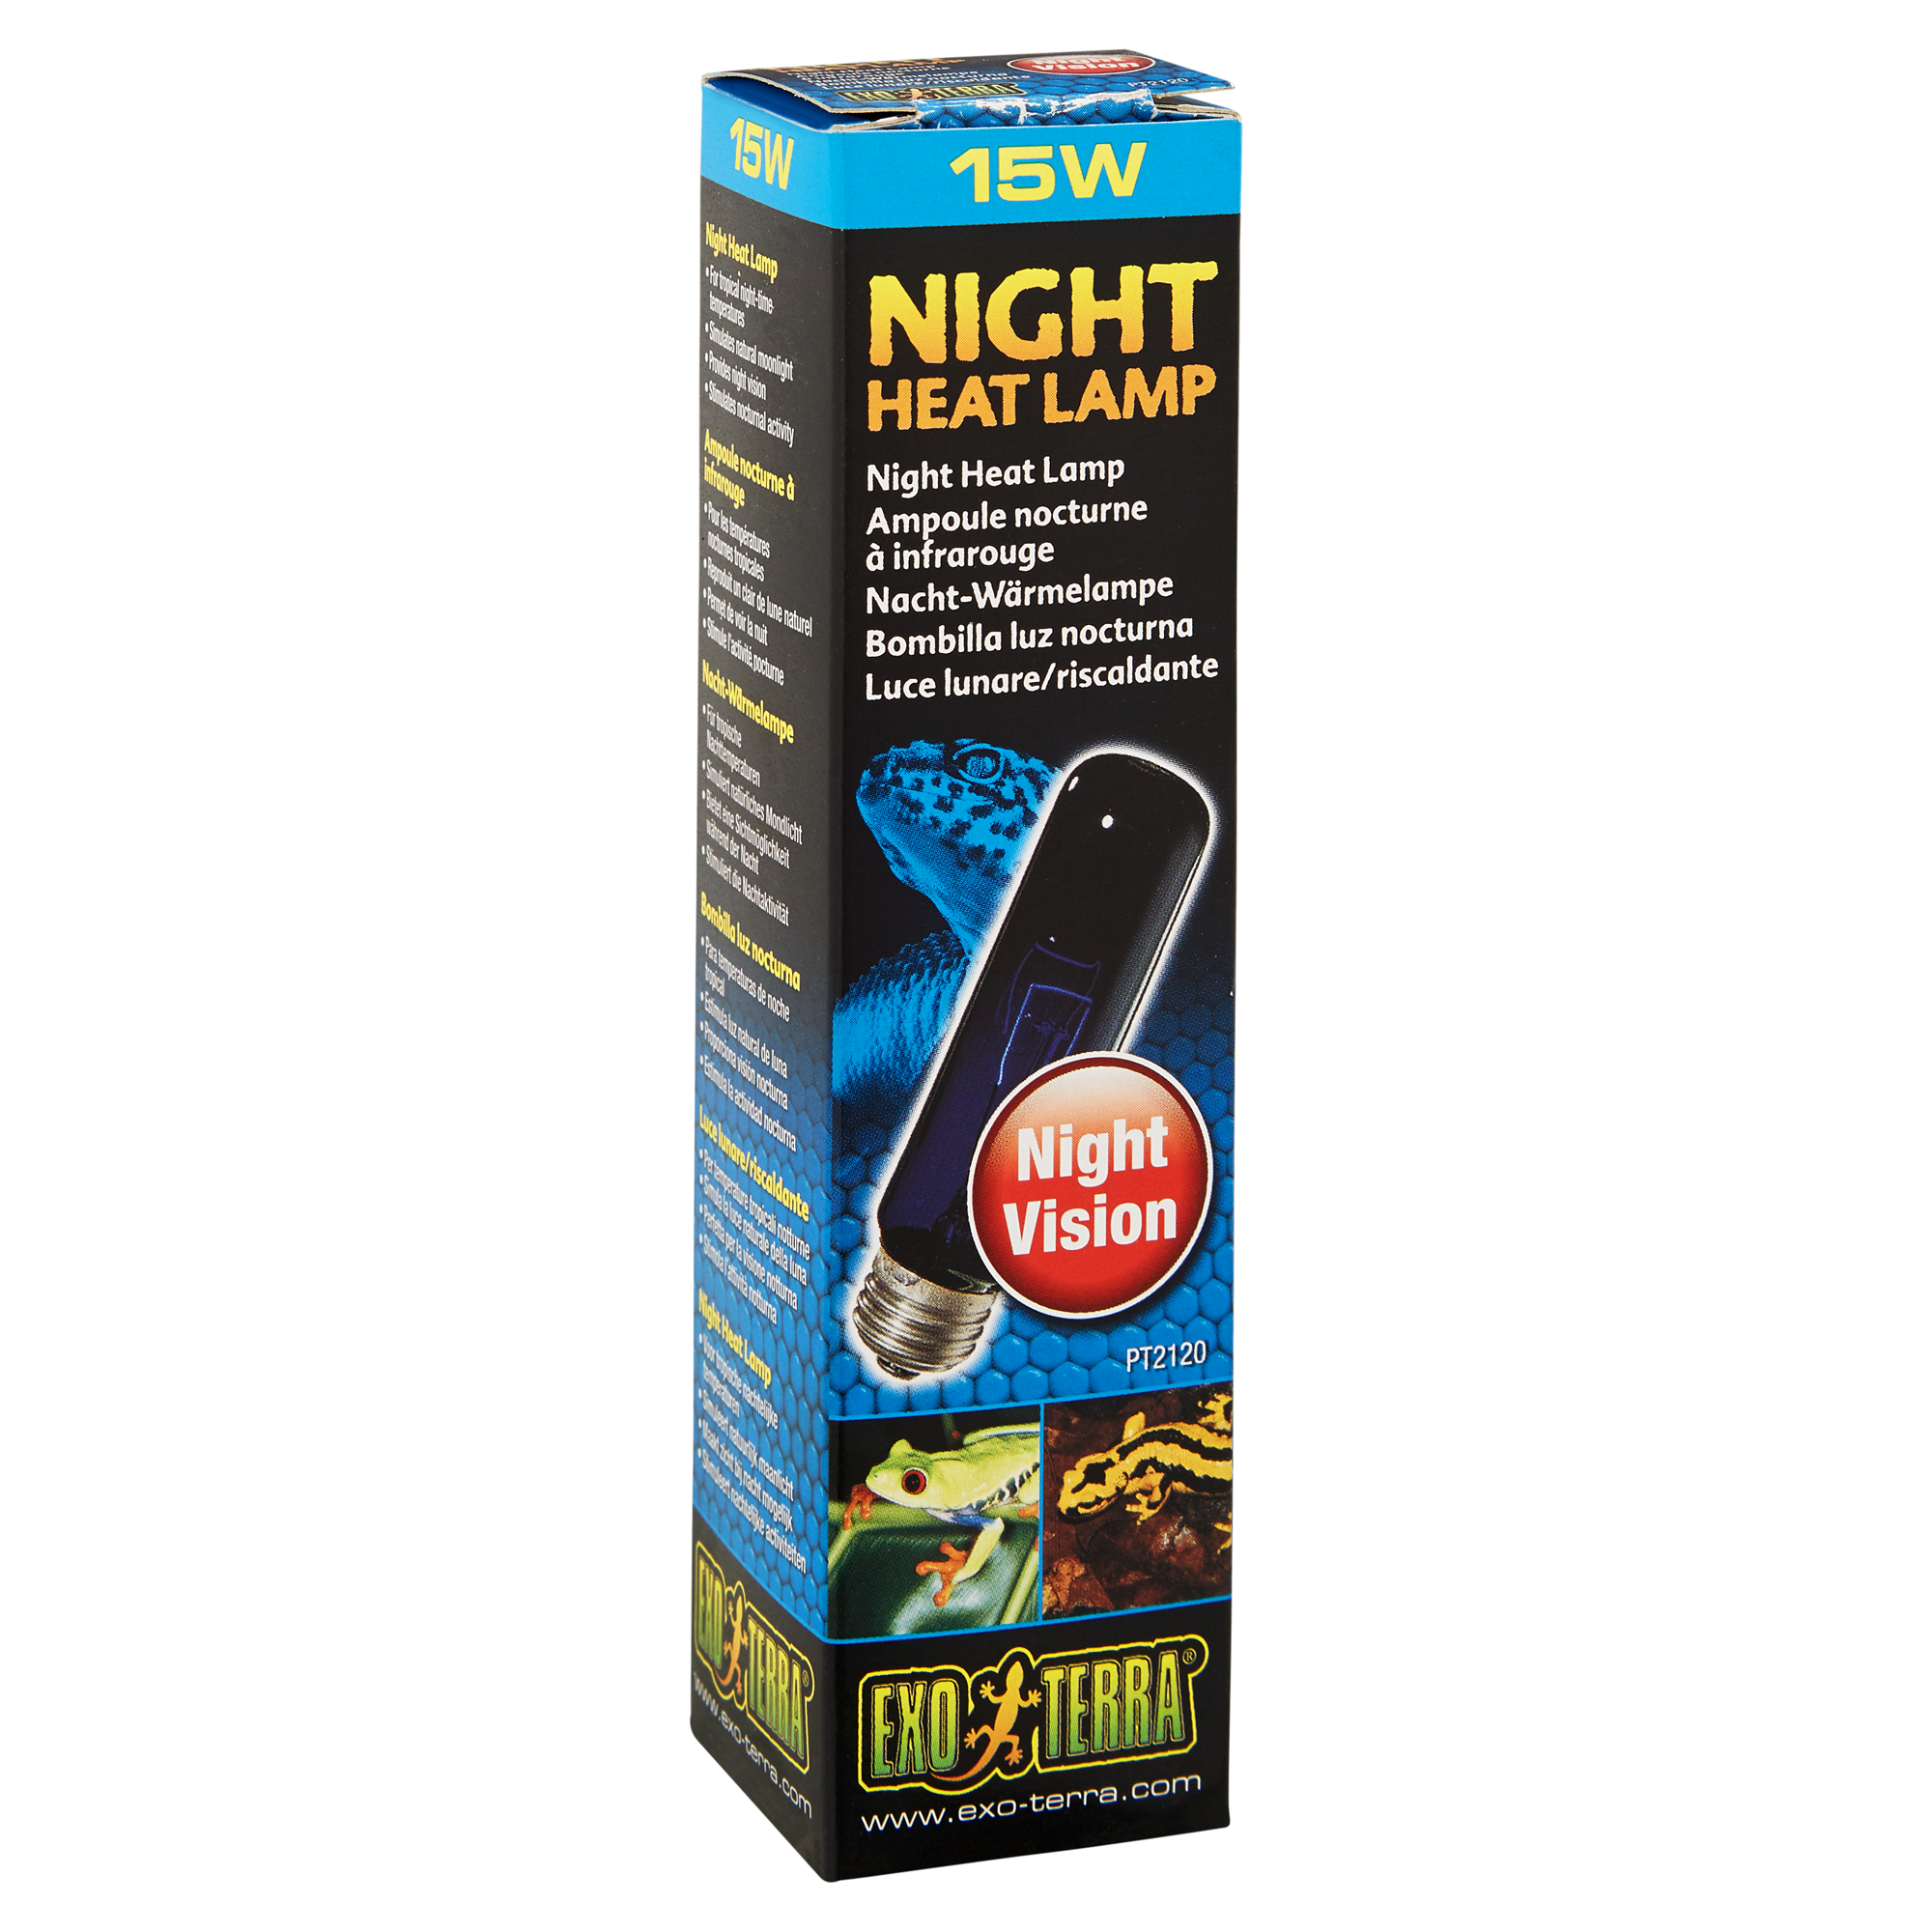 Nachtwärmelampe "Night Heat Lamp" 1500 K 15 W + product picture